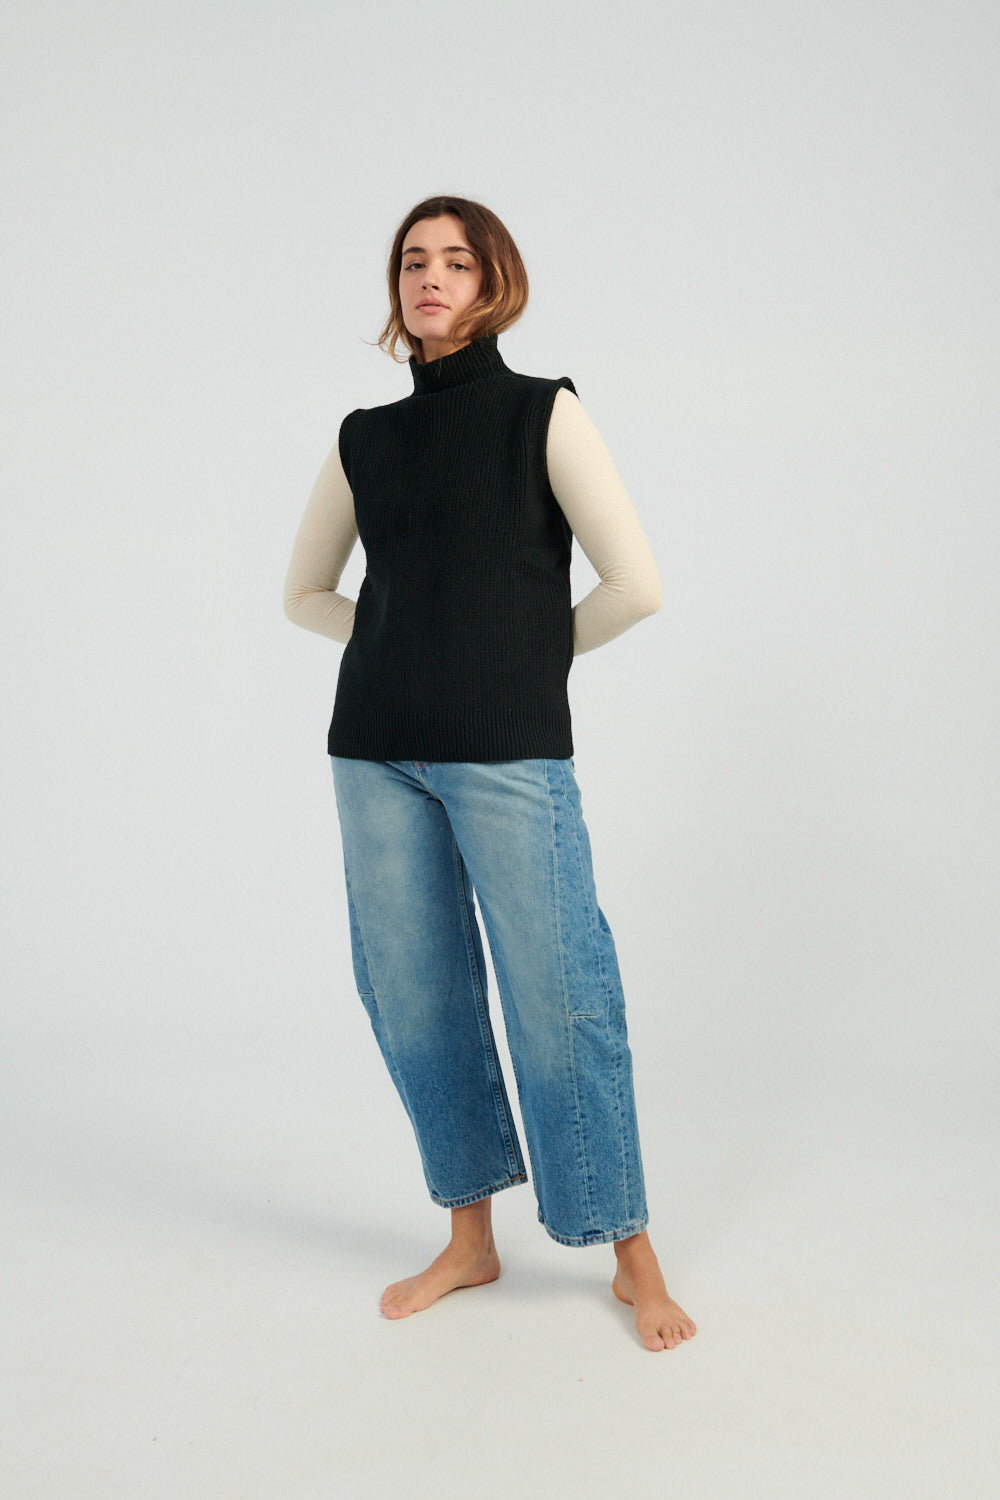 Mara Hoffman Simone Sweater black-Mara Hoffman sleeveless turtleneck tank sweater black-Idun-St. Paul